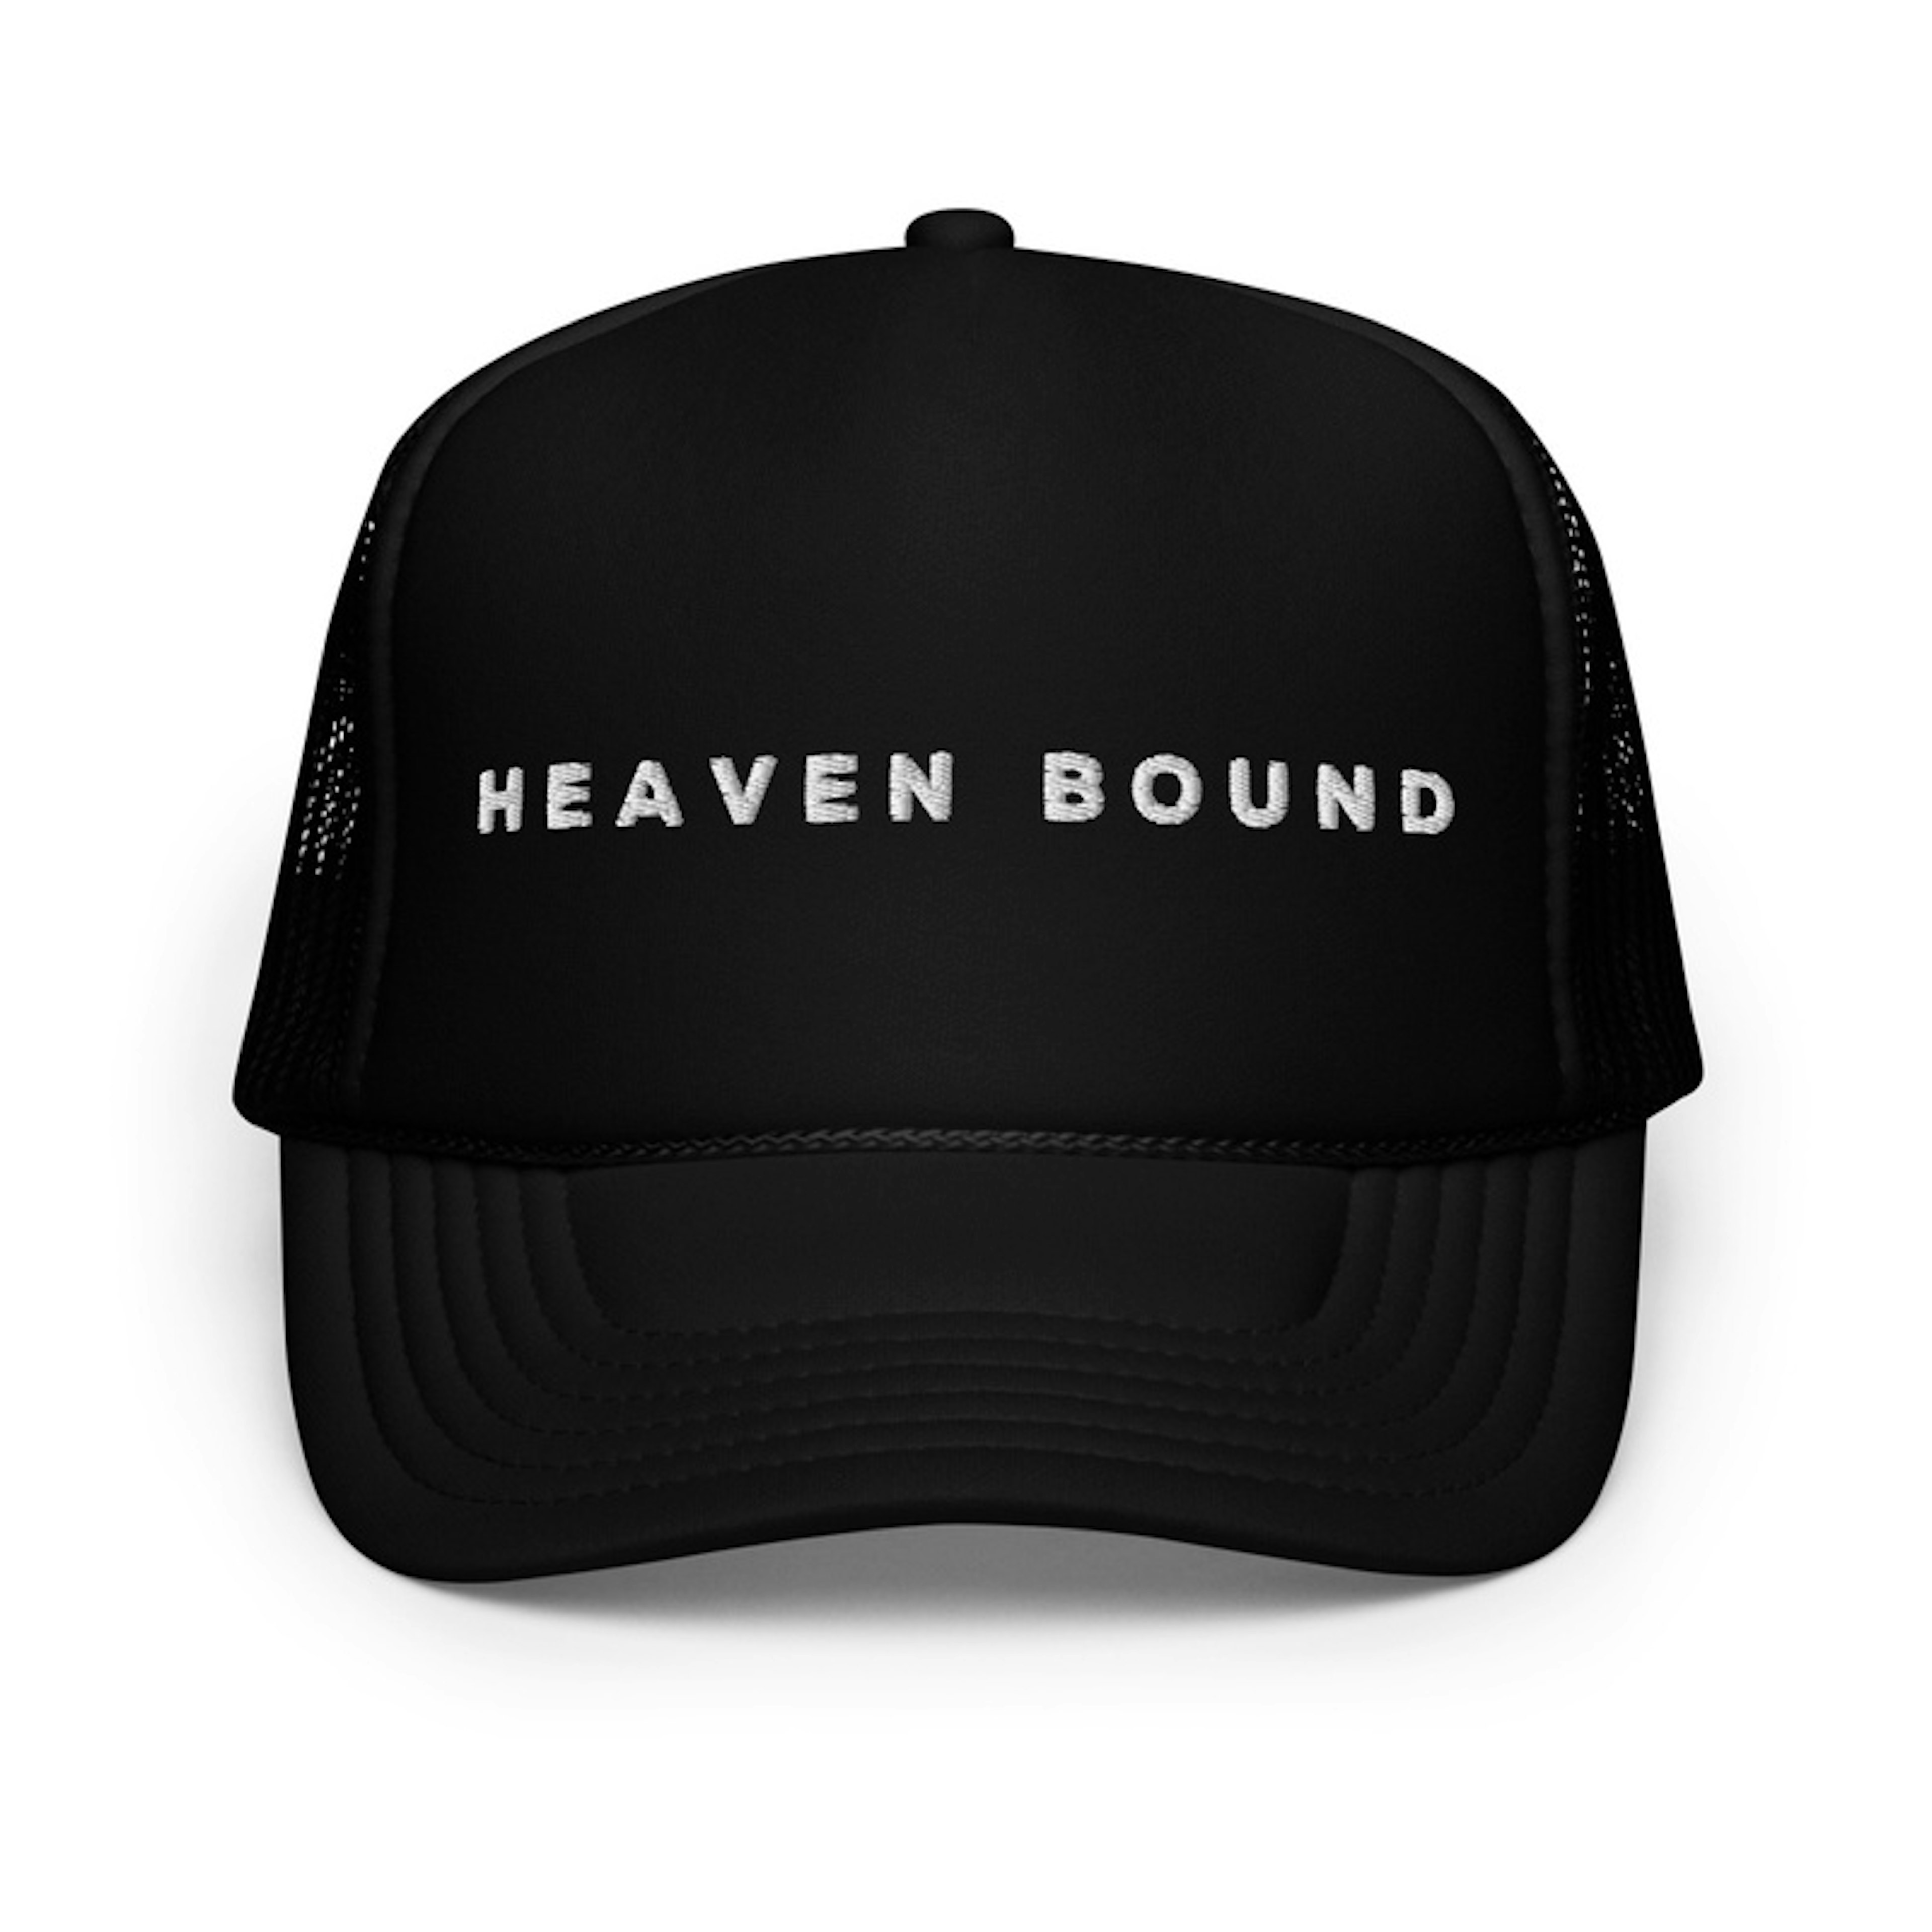 Heaven Bound Trucker Hats